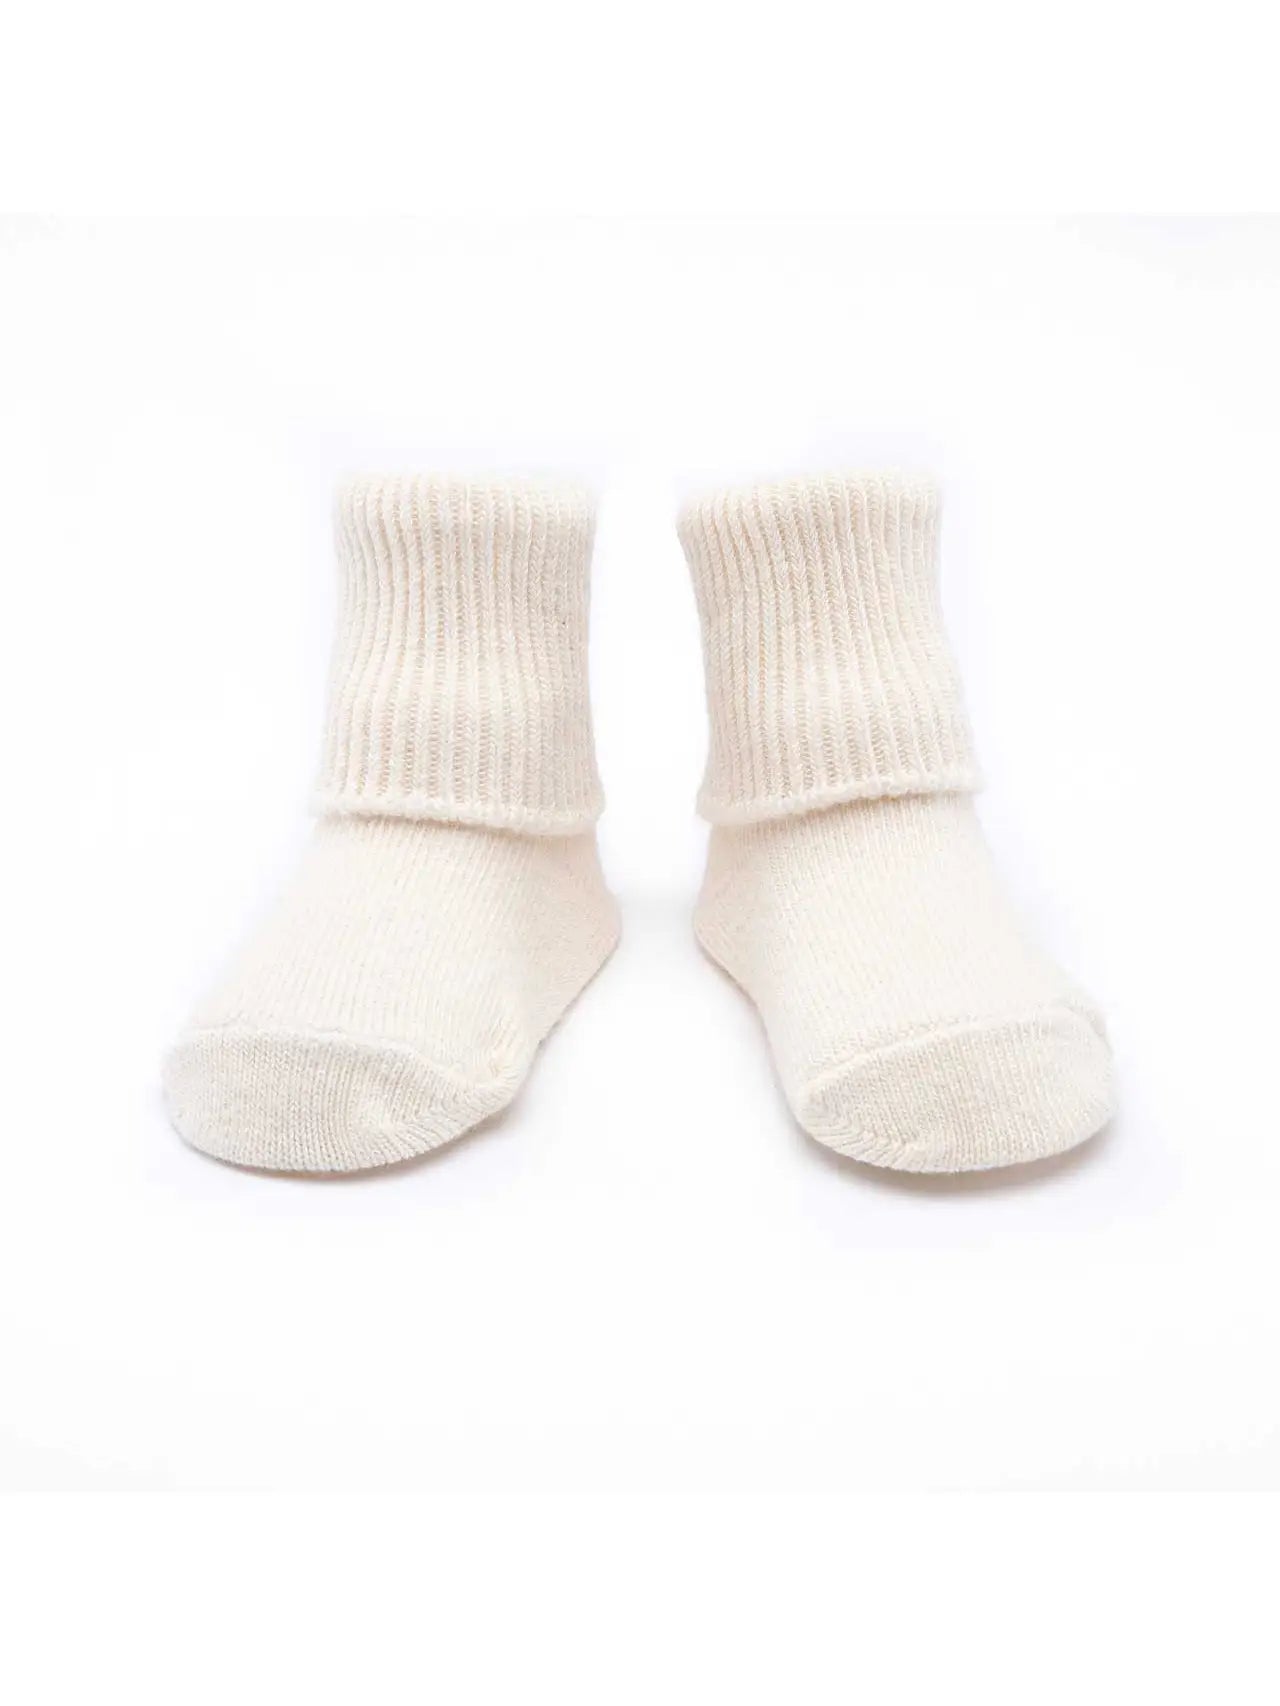 Natural organic cotton socks